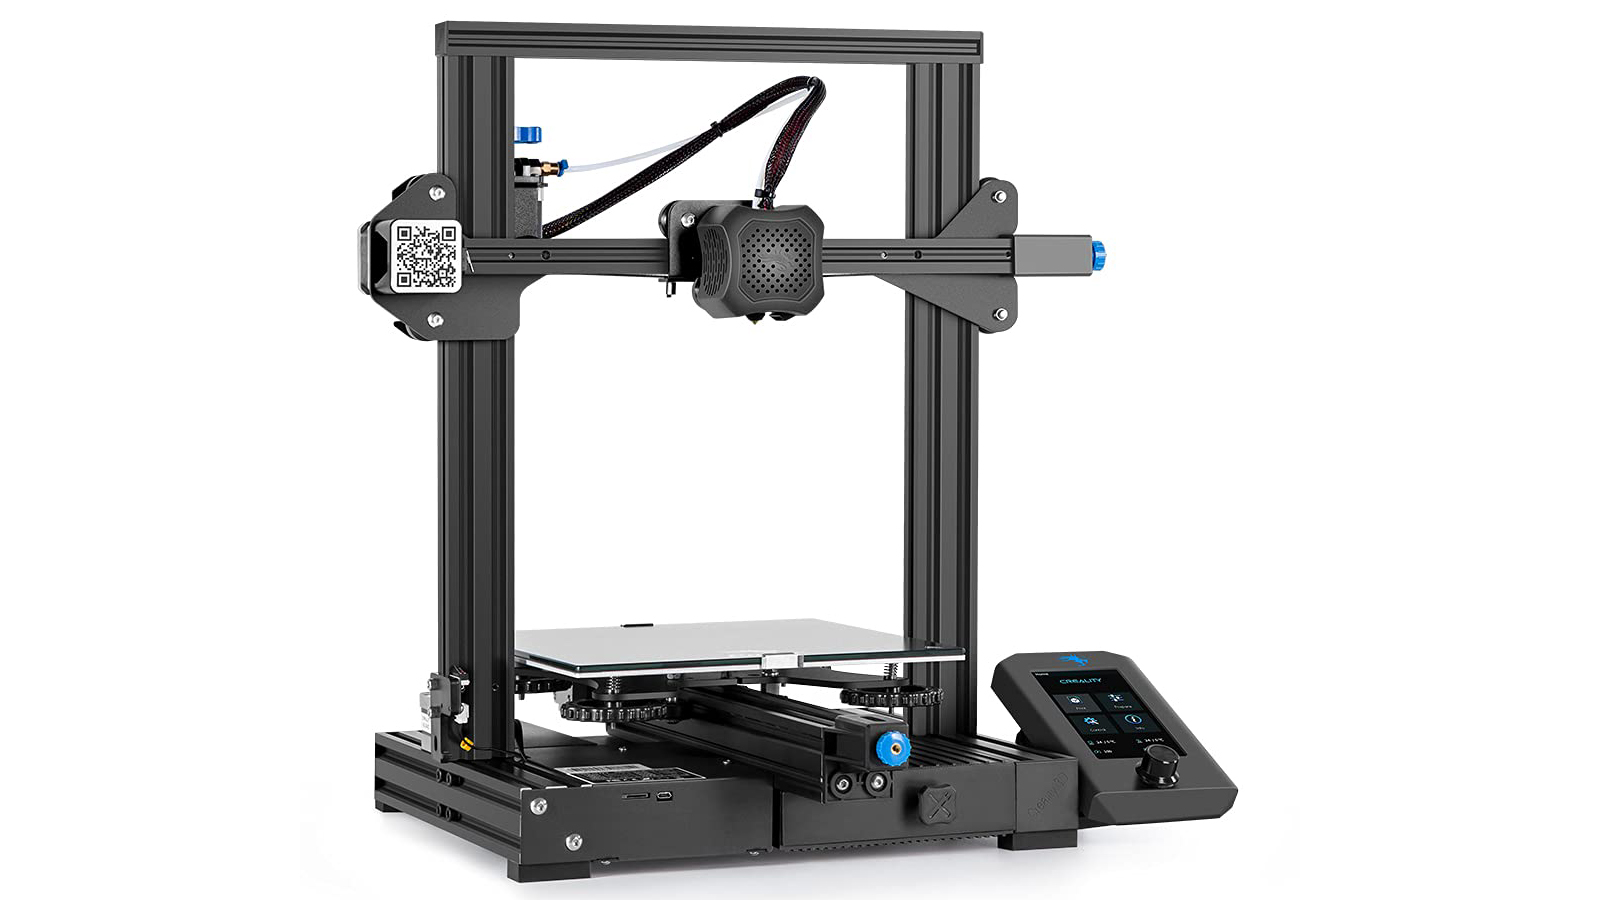 Save $40 on the Creality Ender 3 V2 3D printer at Amazon thumbnail